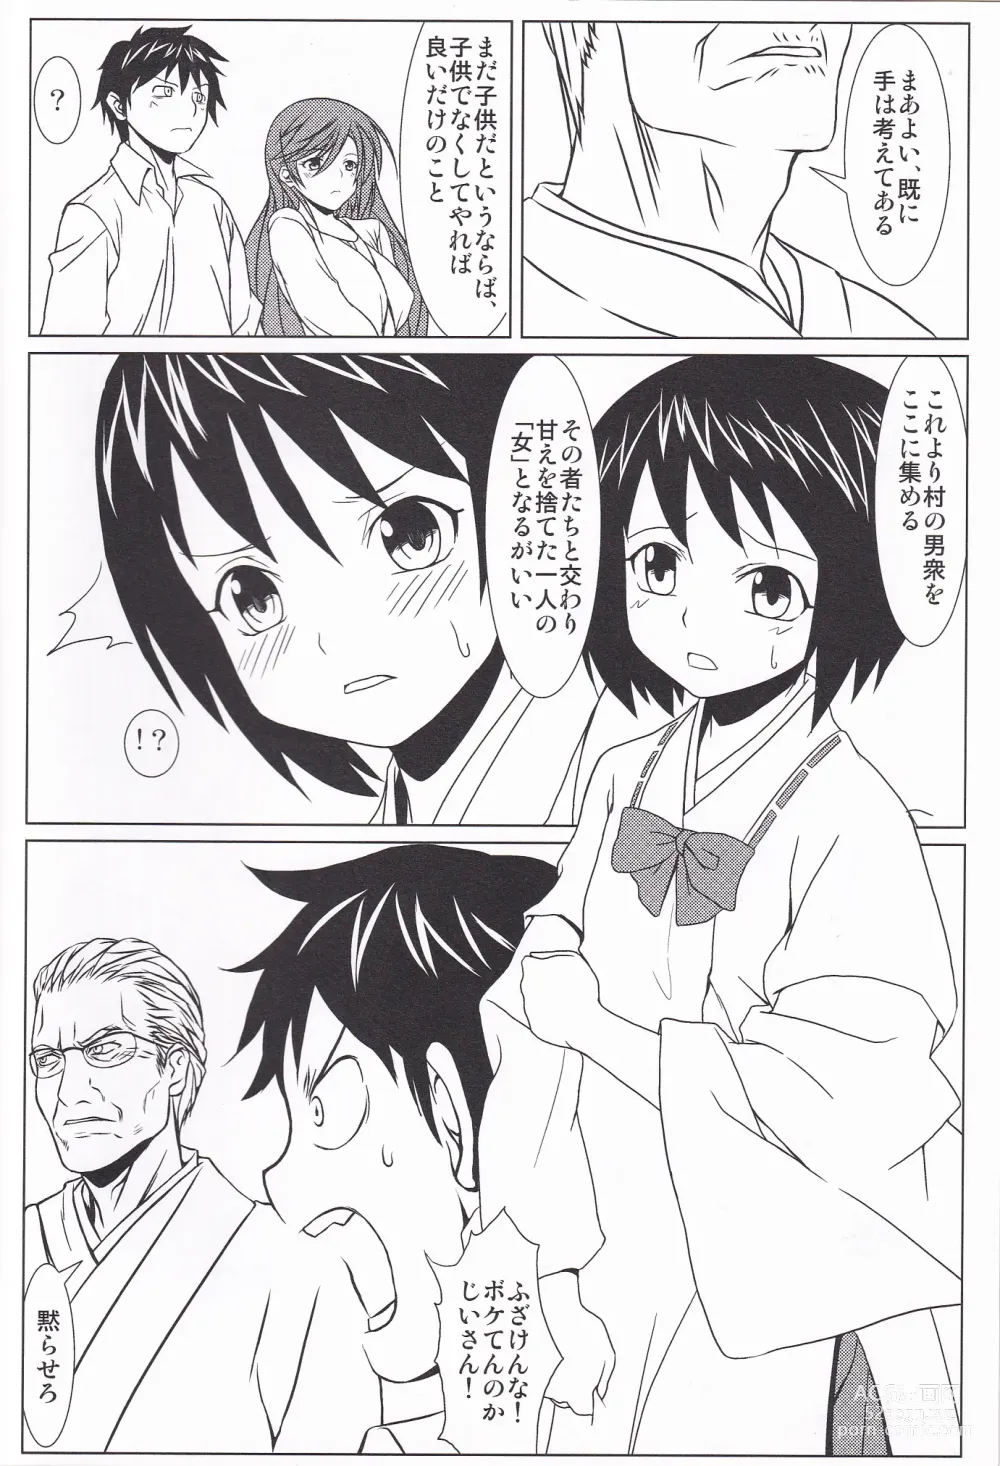 Page 3 of doujinshi Hibi no Uta